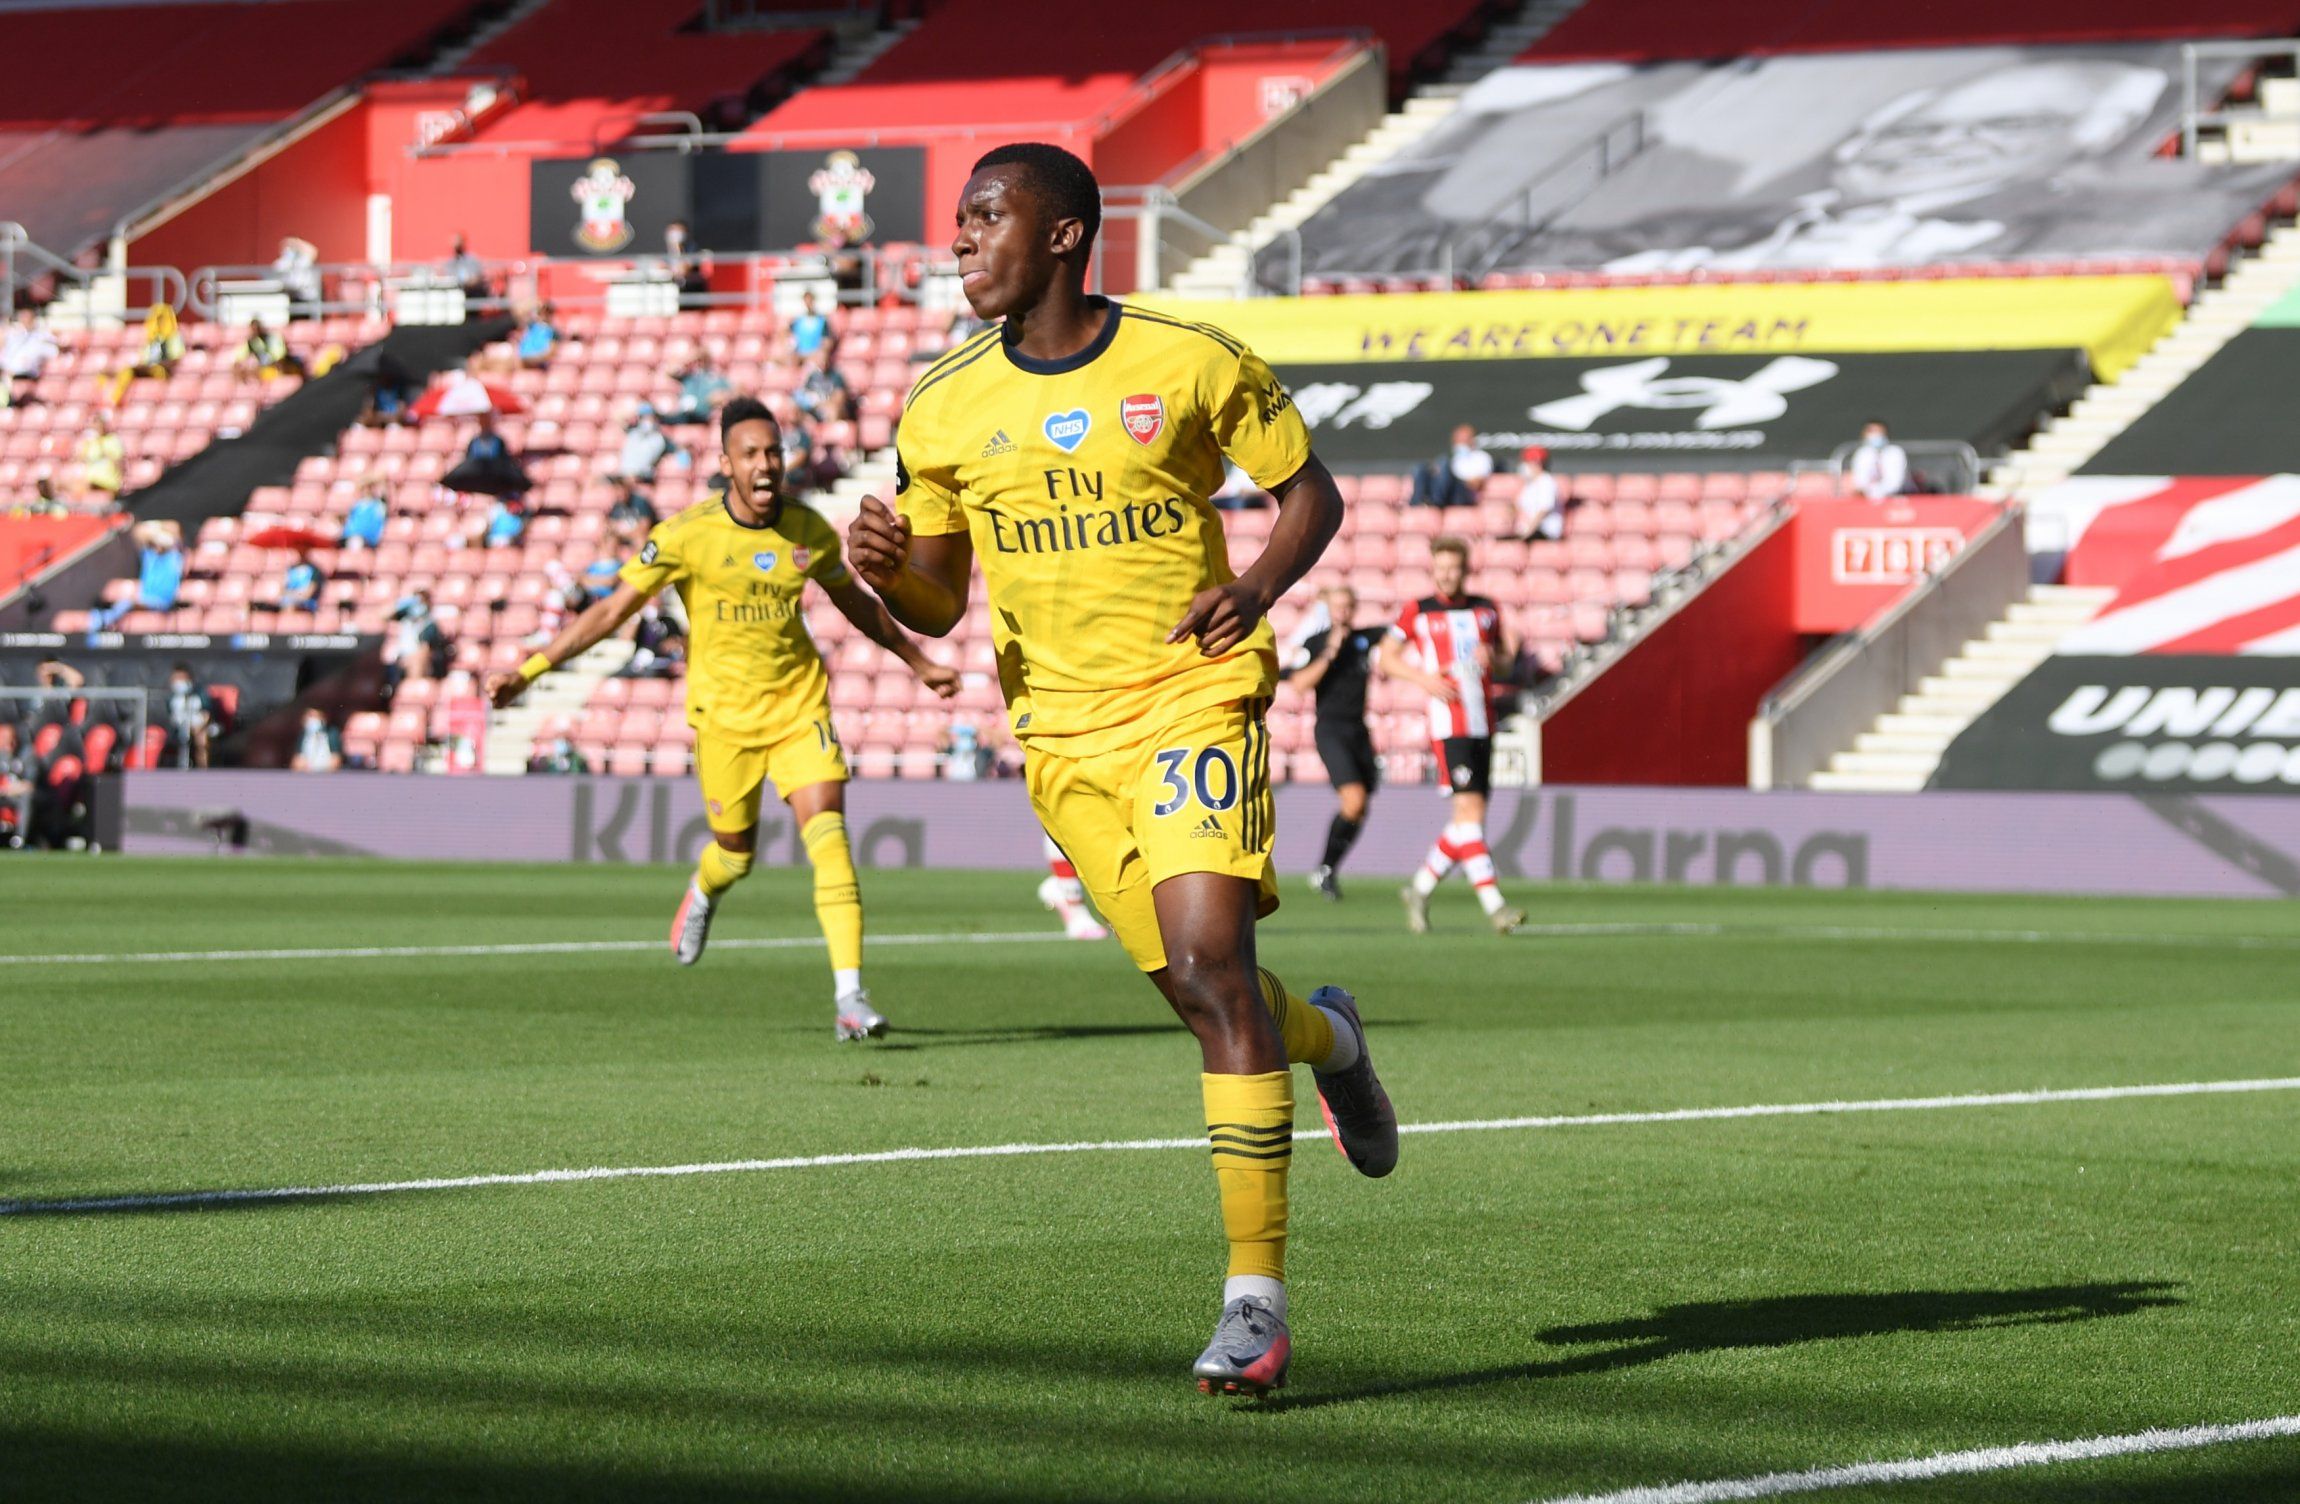 arsenal striker eddie nketiah celebrates scoring against southampton in the premier league